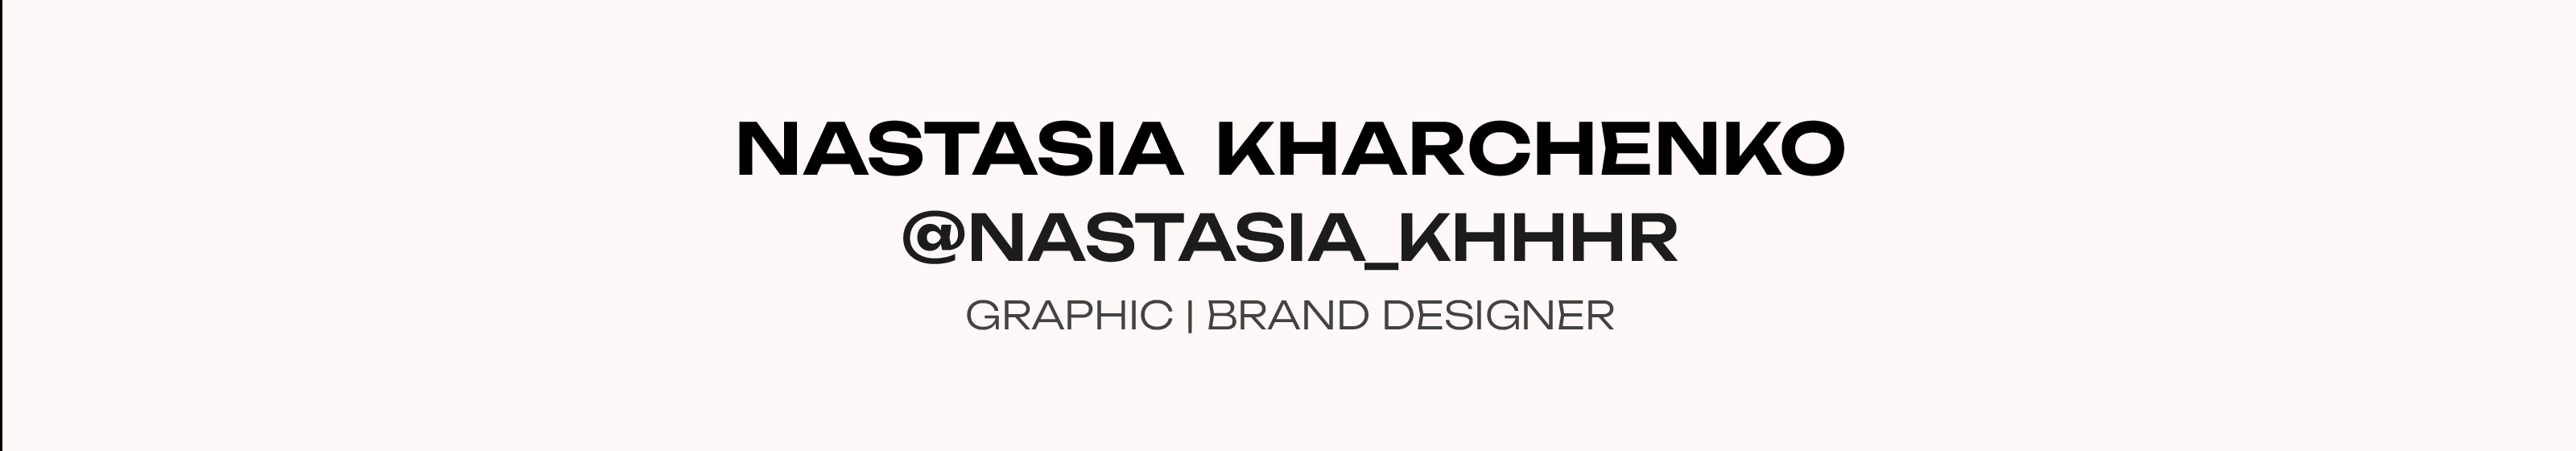 Banner de perfil de Nastasia Kharchenko